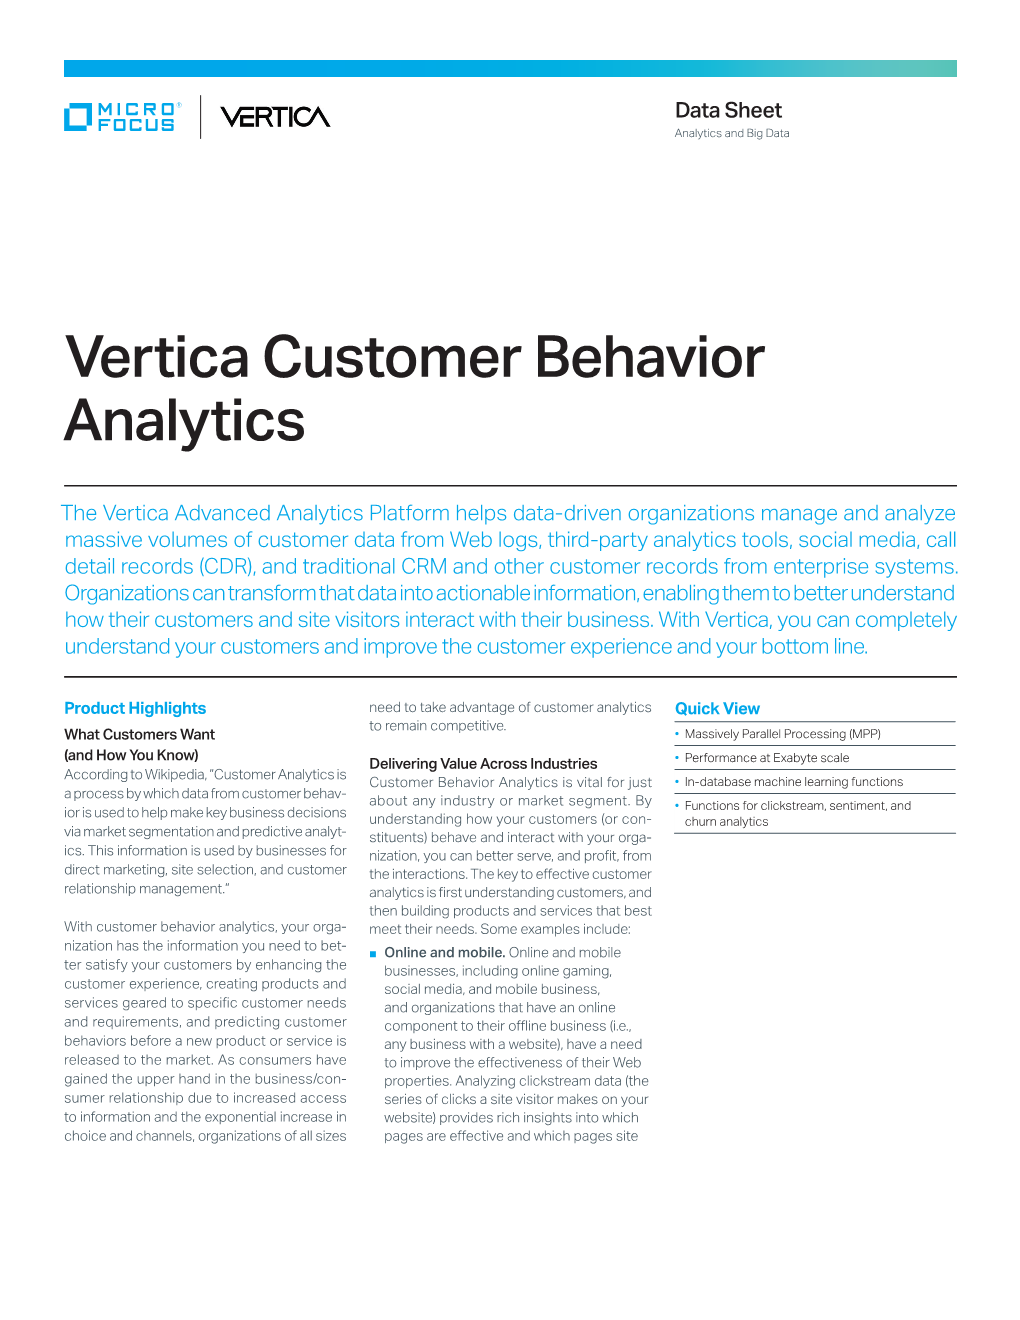 Vertica Customer Behavior Analytics